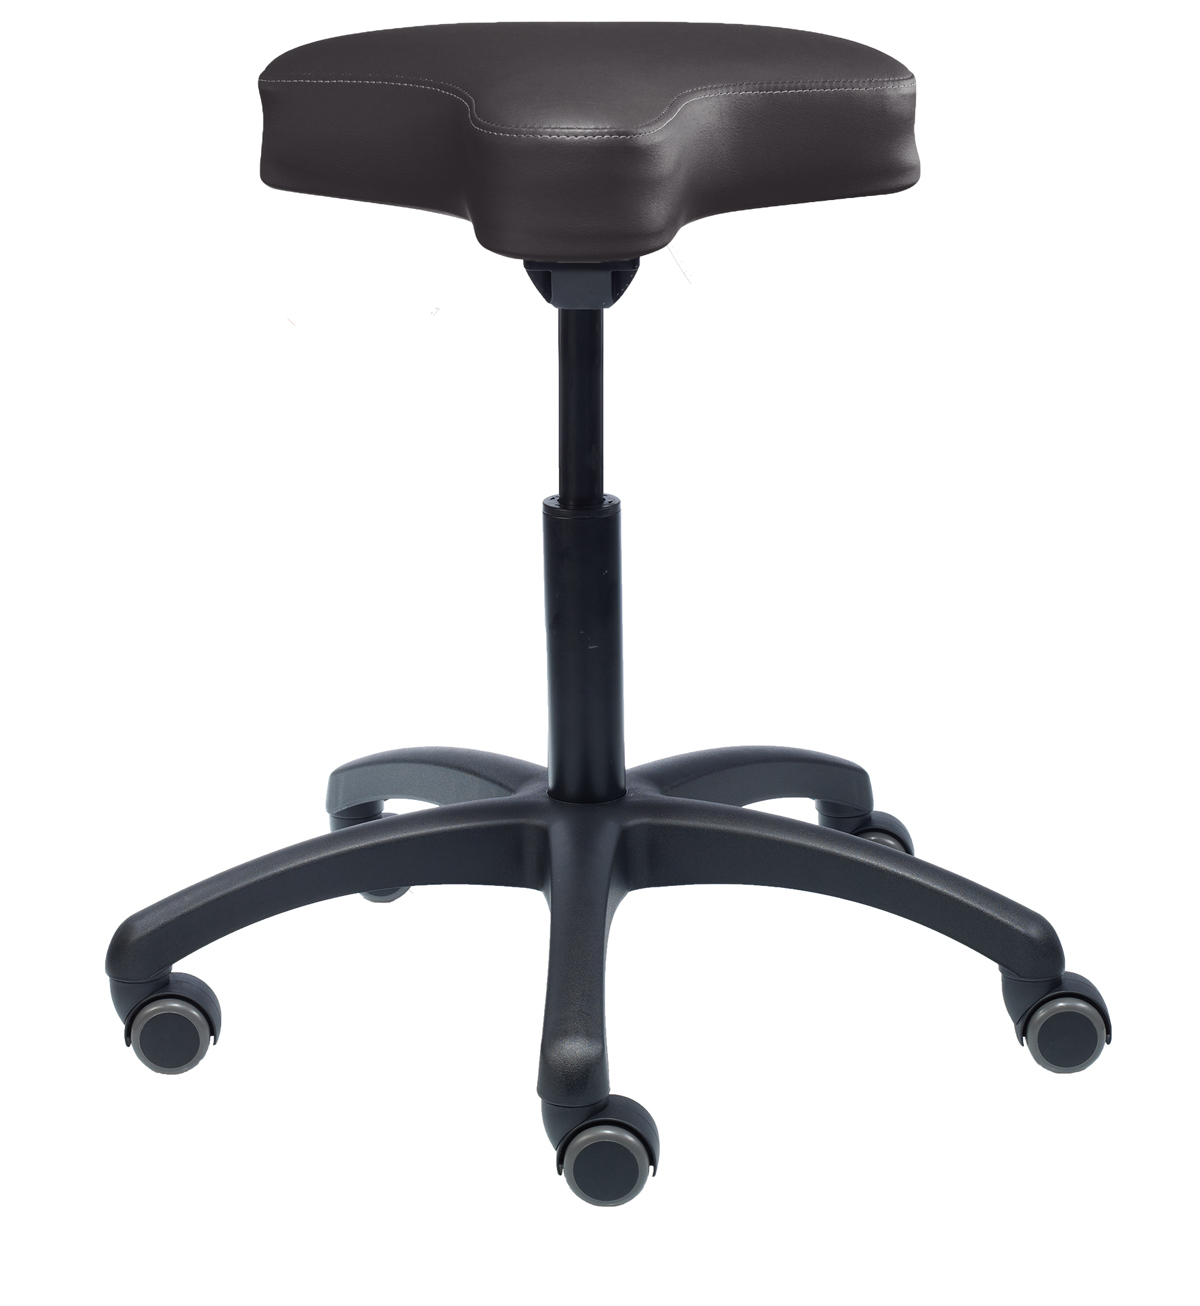 123435-Drehhocker-ergonomischer-Sitz-stone2nfgOiUdRg4Qy